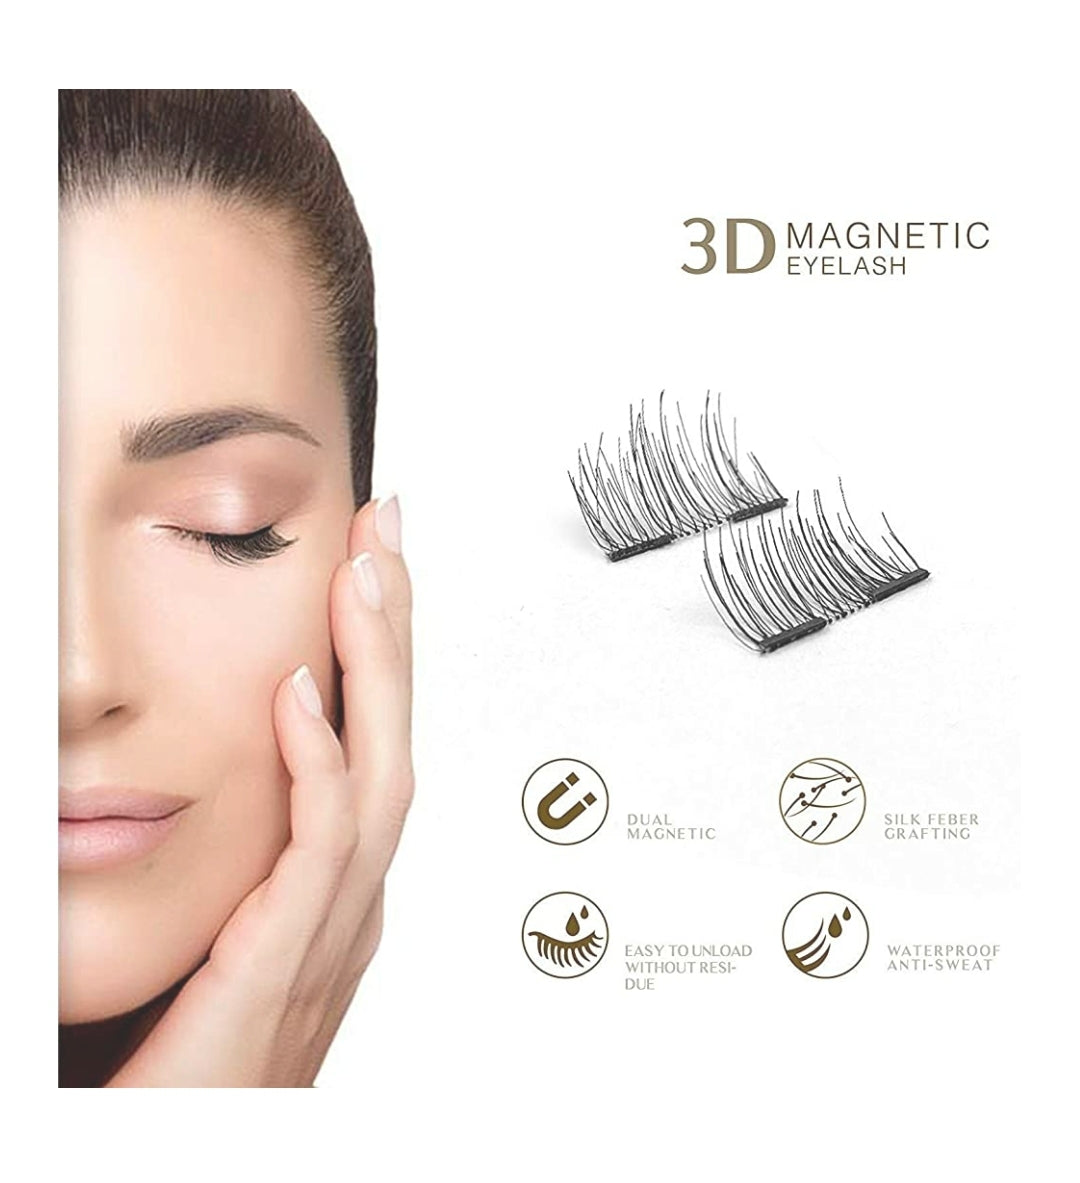 Vassoul Dual Magnetic Eyelashes, Natural Half Lash, 0.2mm Ultra Thin Magnet, Light weight Reusable 3D Eyelashes with Applicator